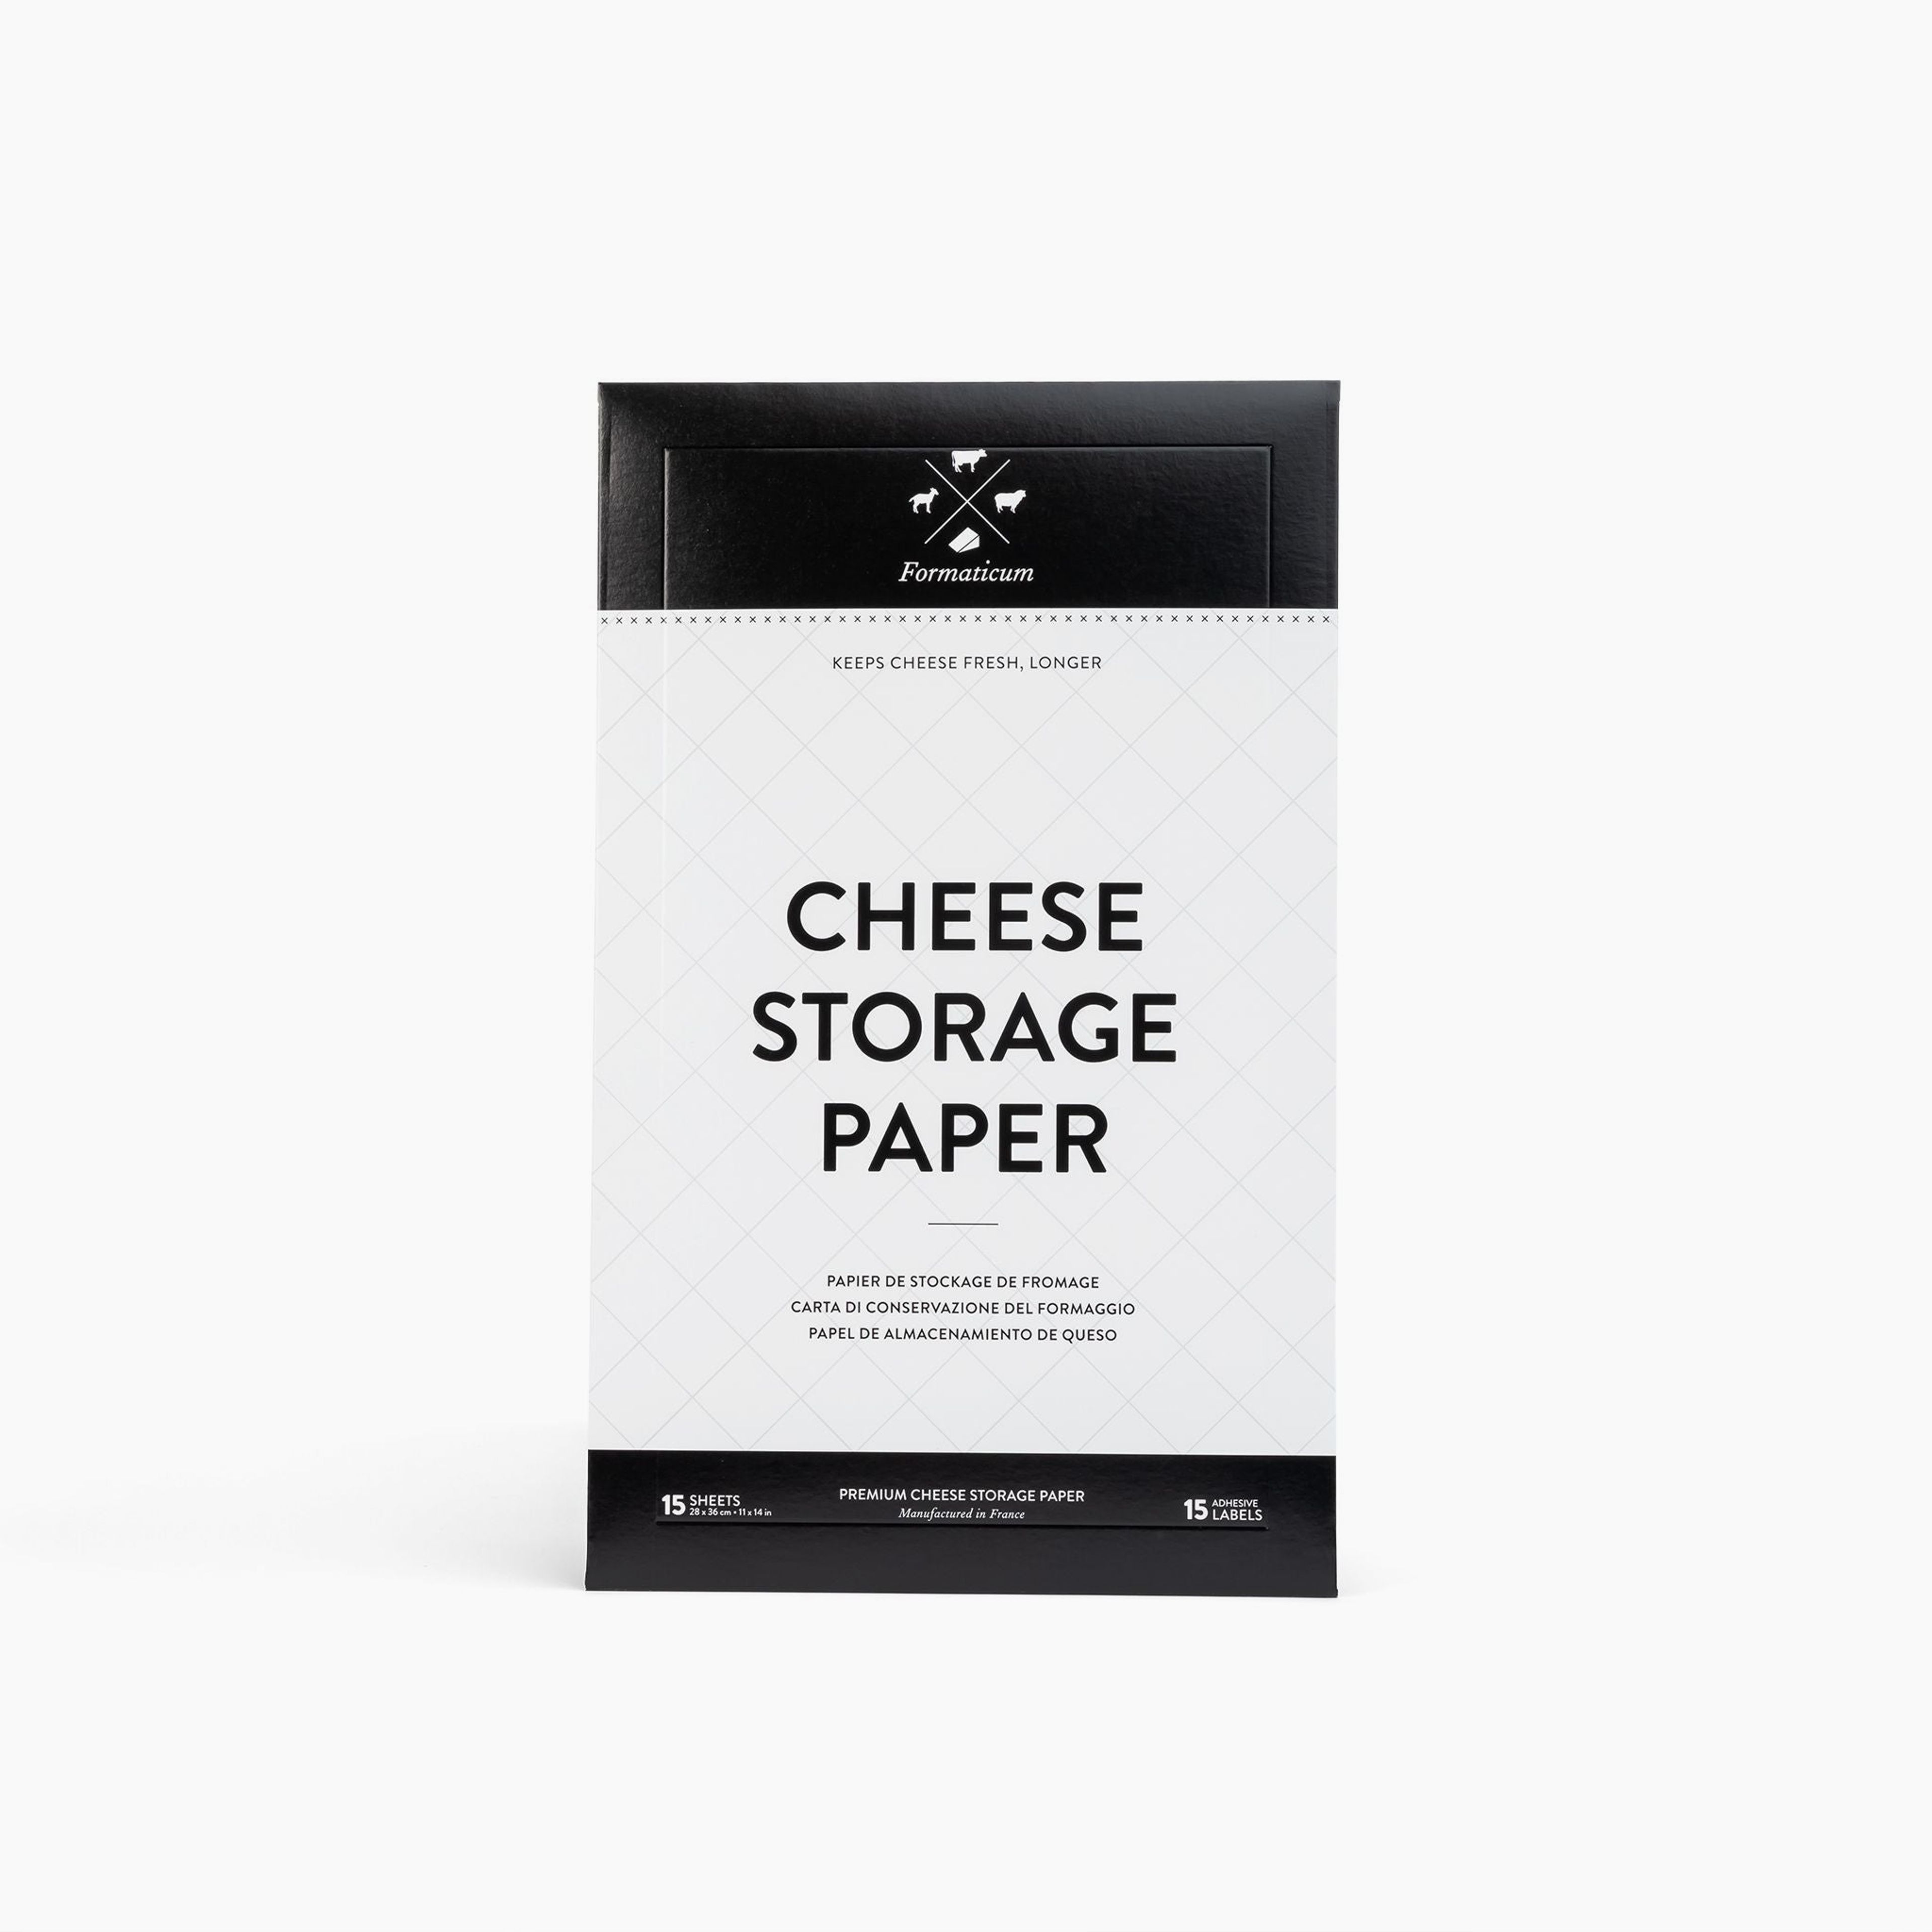 Cheese Storage Paper